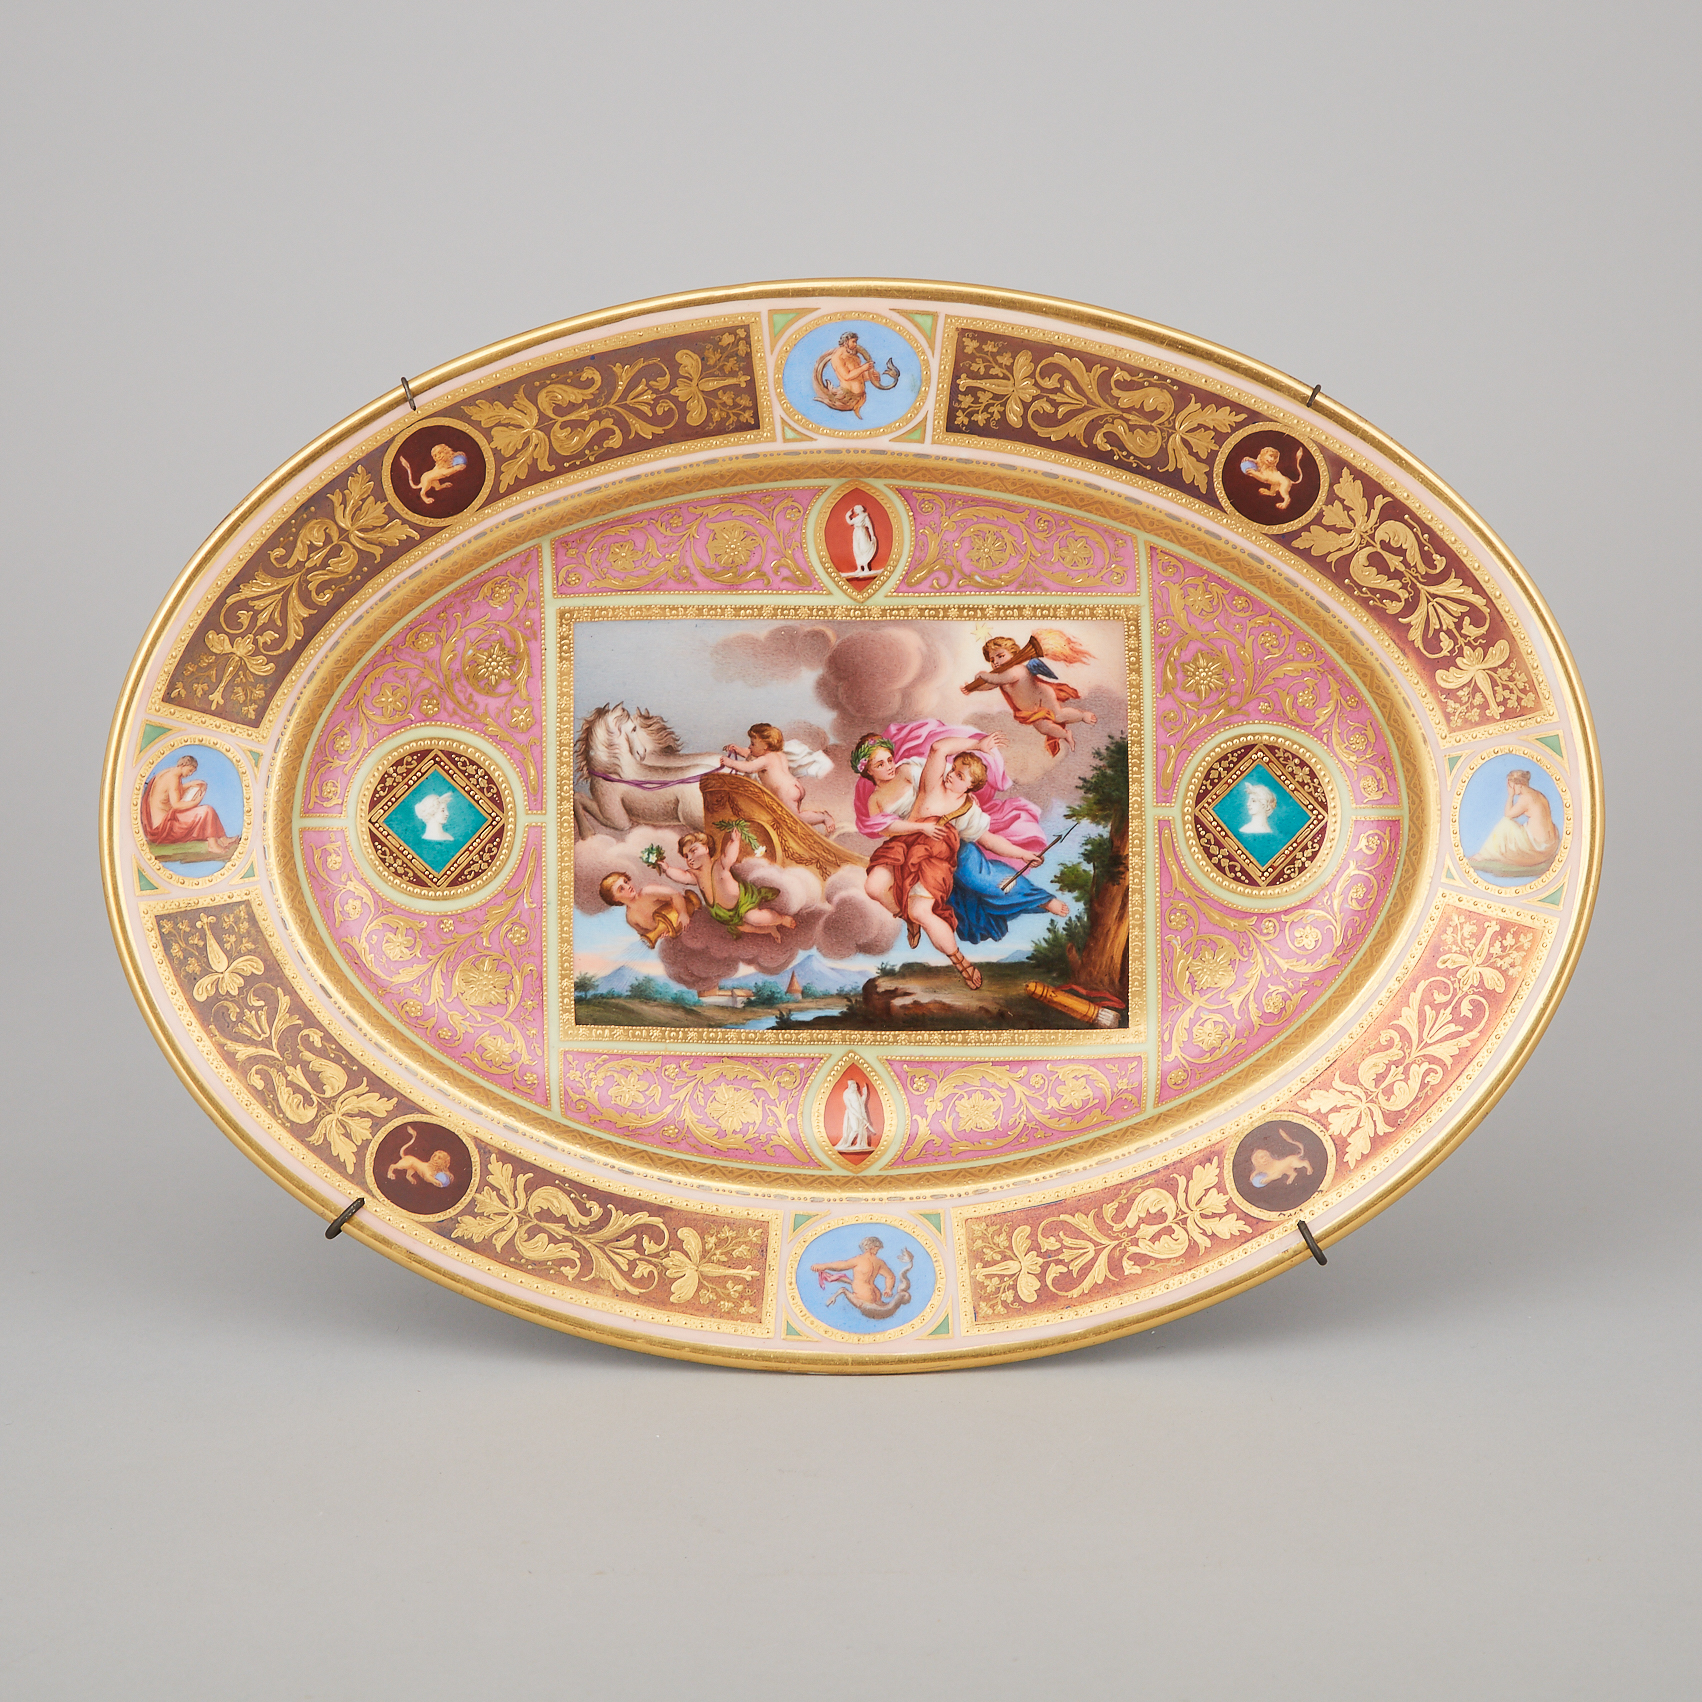 'Vienna' Oval Platter, late 19th century